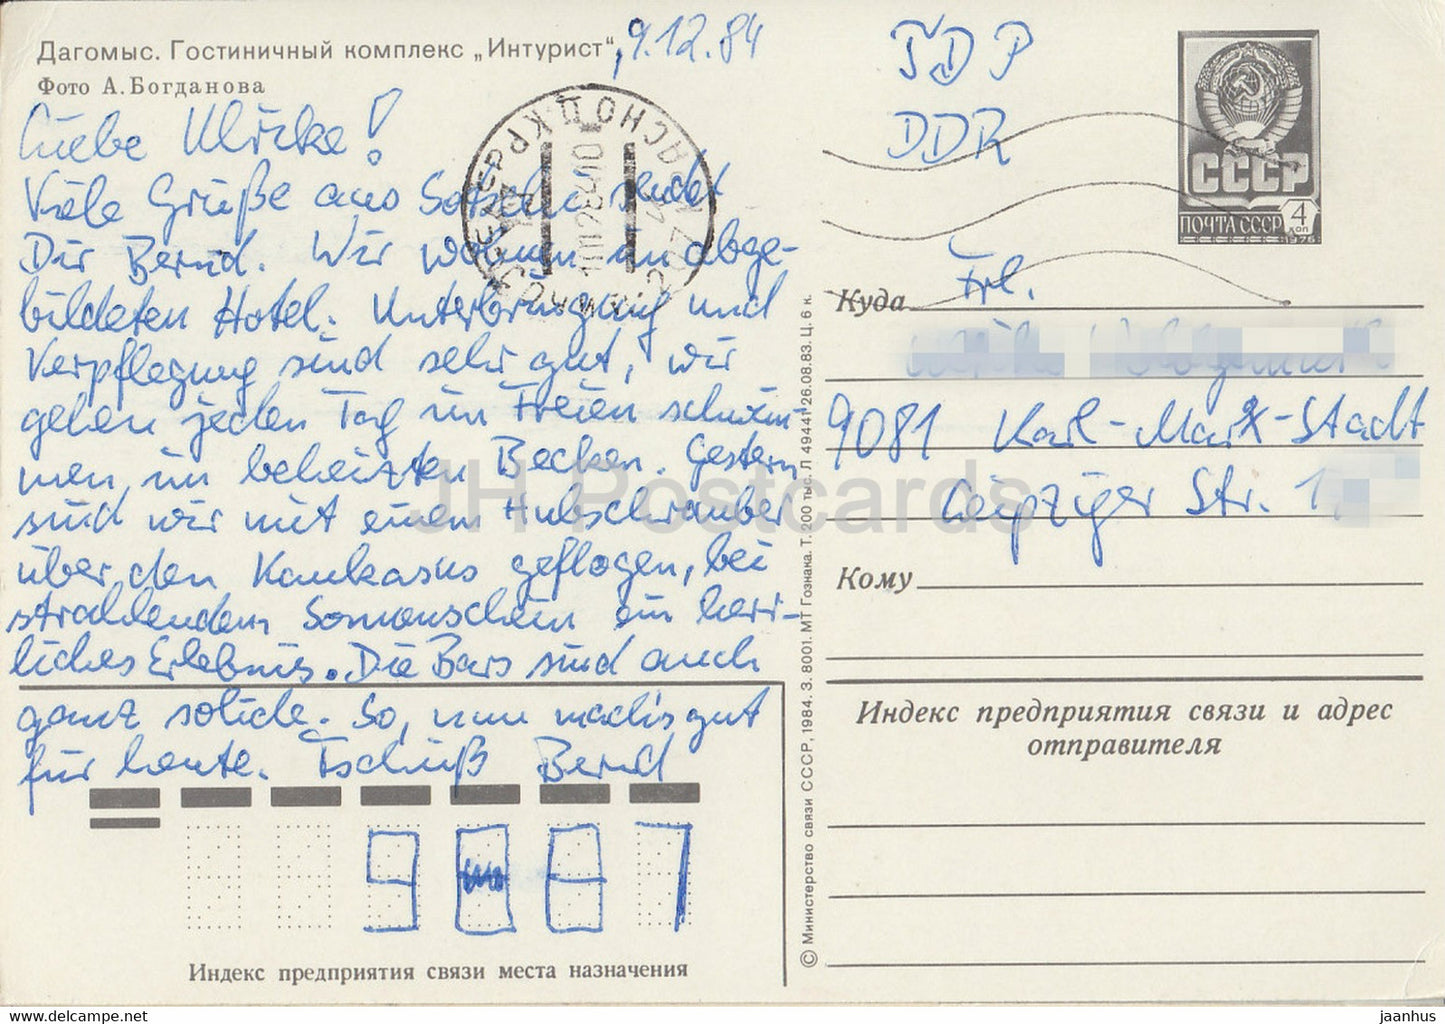 Dagomys - Intourist hotel complex - postal stationery - 1984 - Russia USSR - used